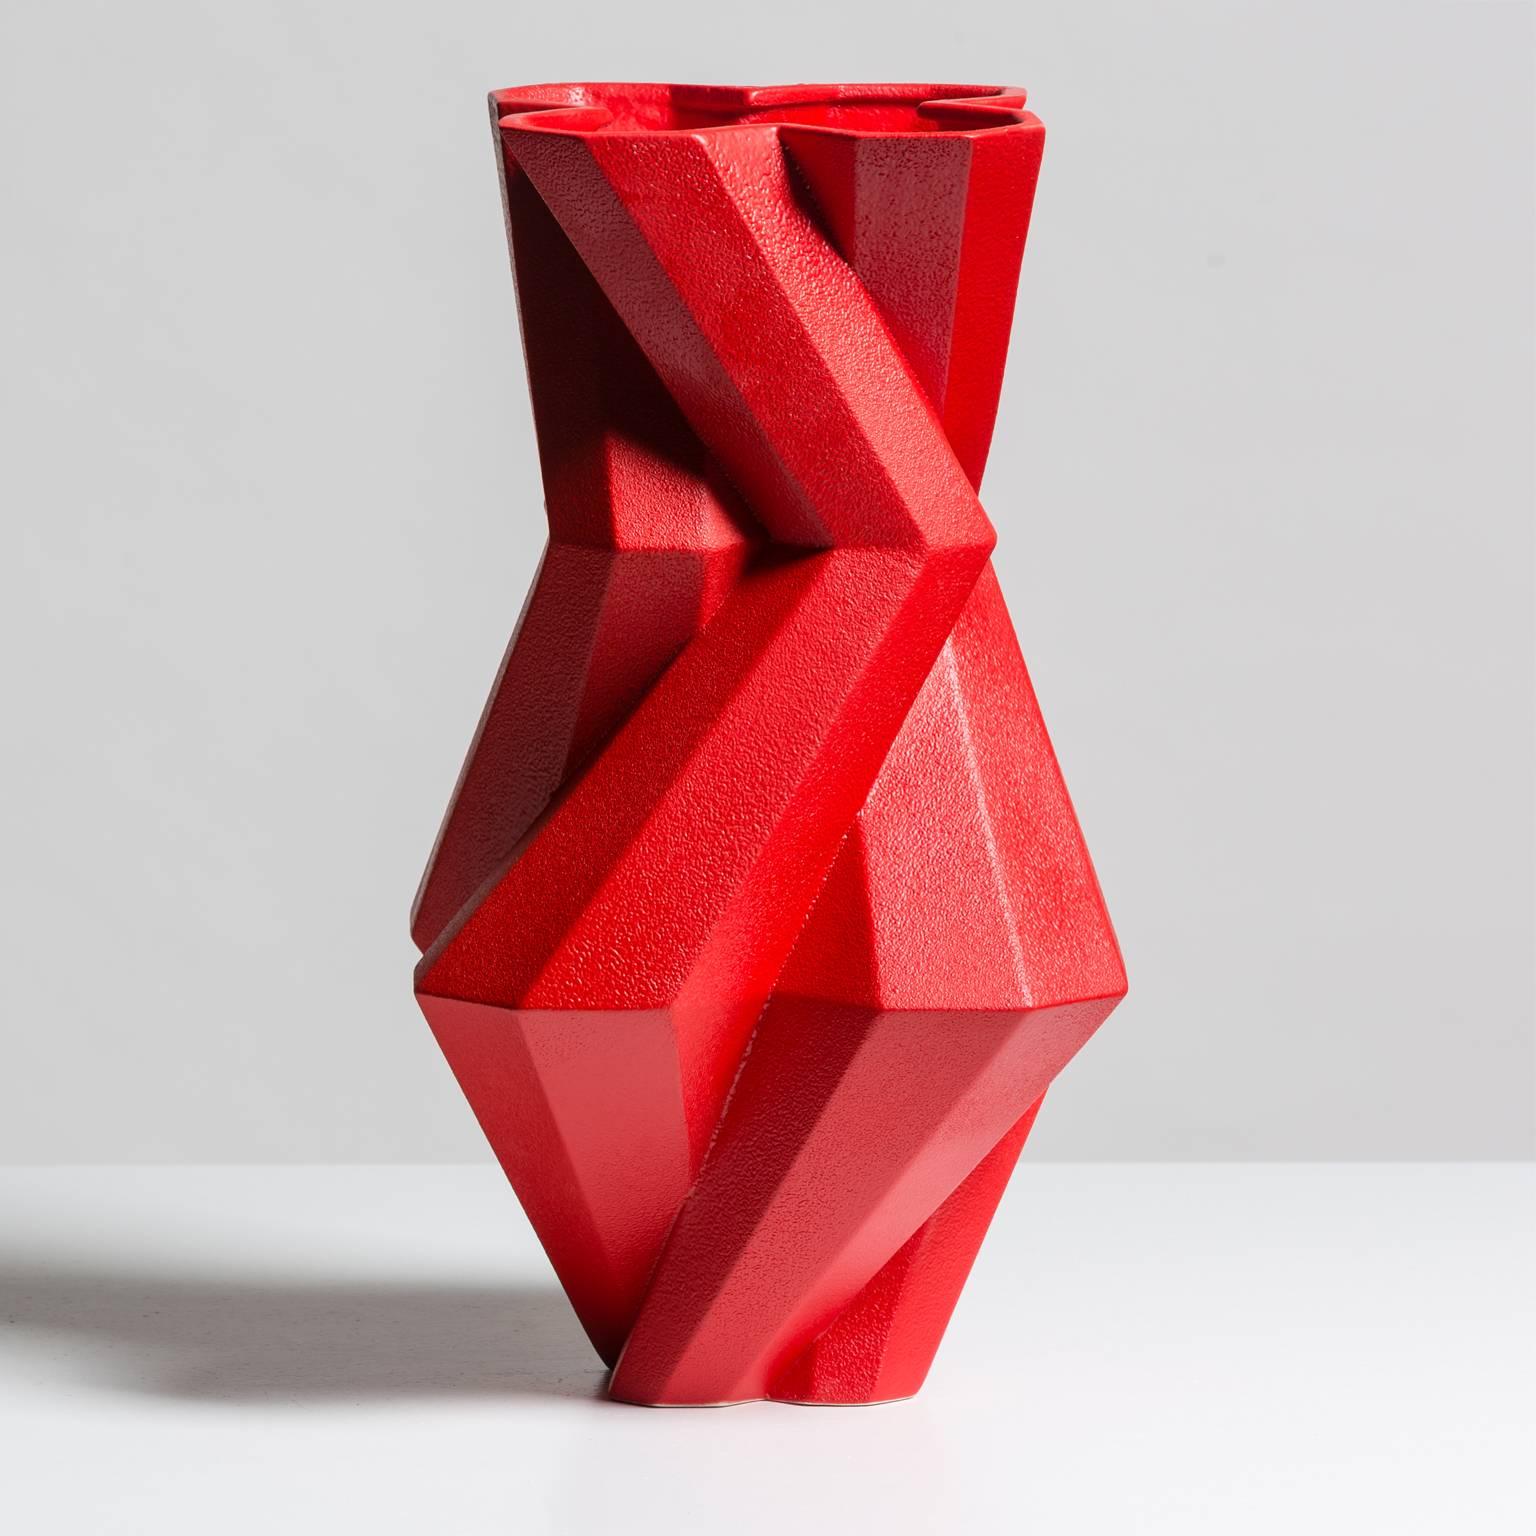 Modern Fortress Castle Vase in Red Ceramic by Lara Bohinc